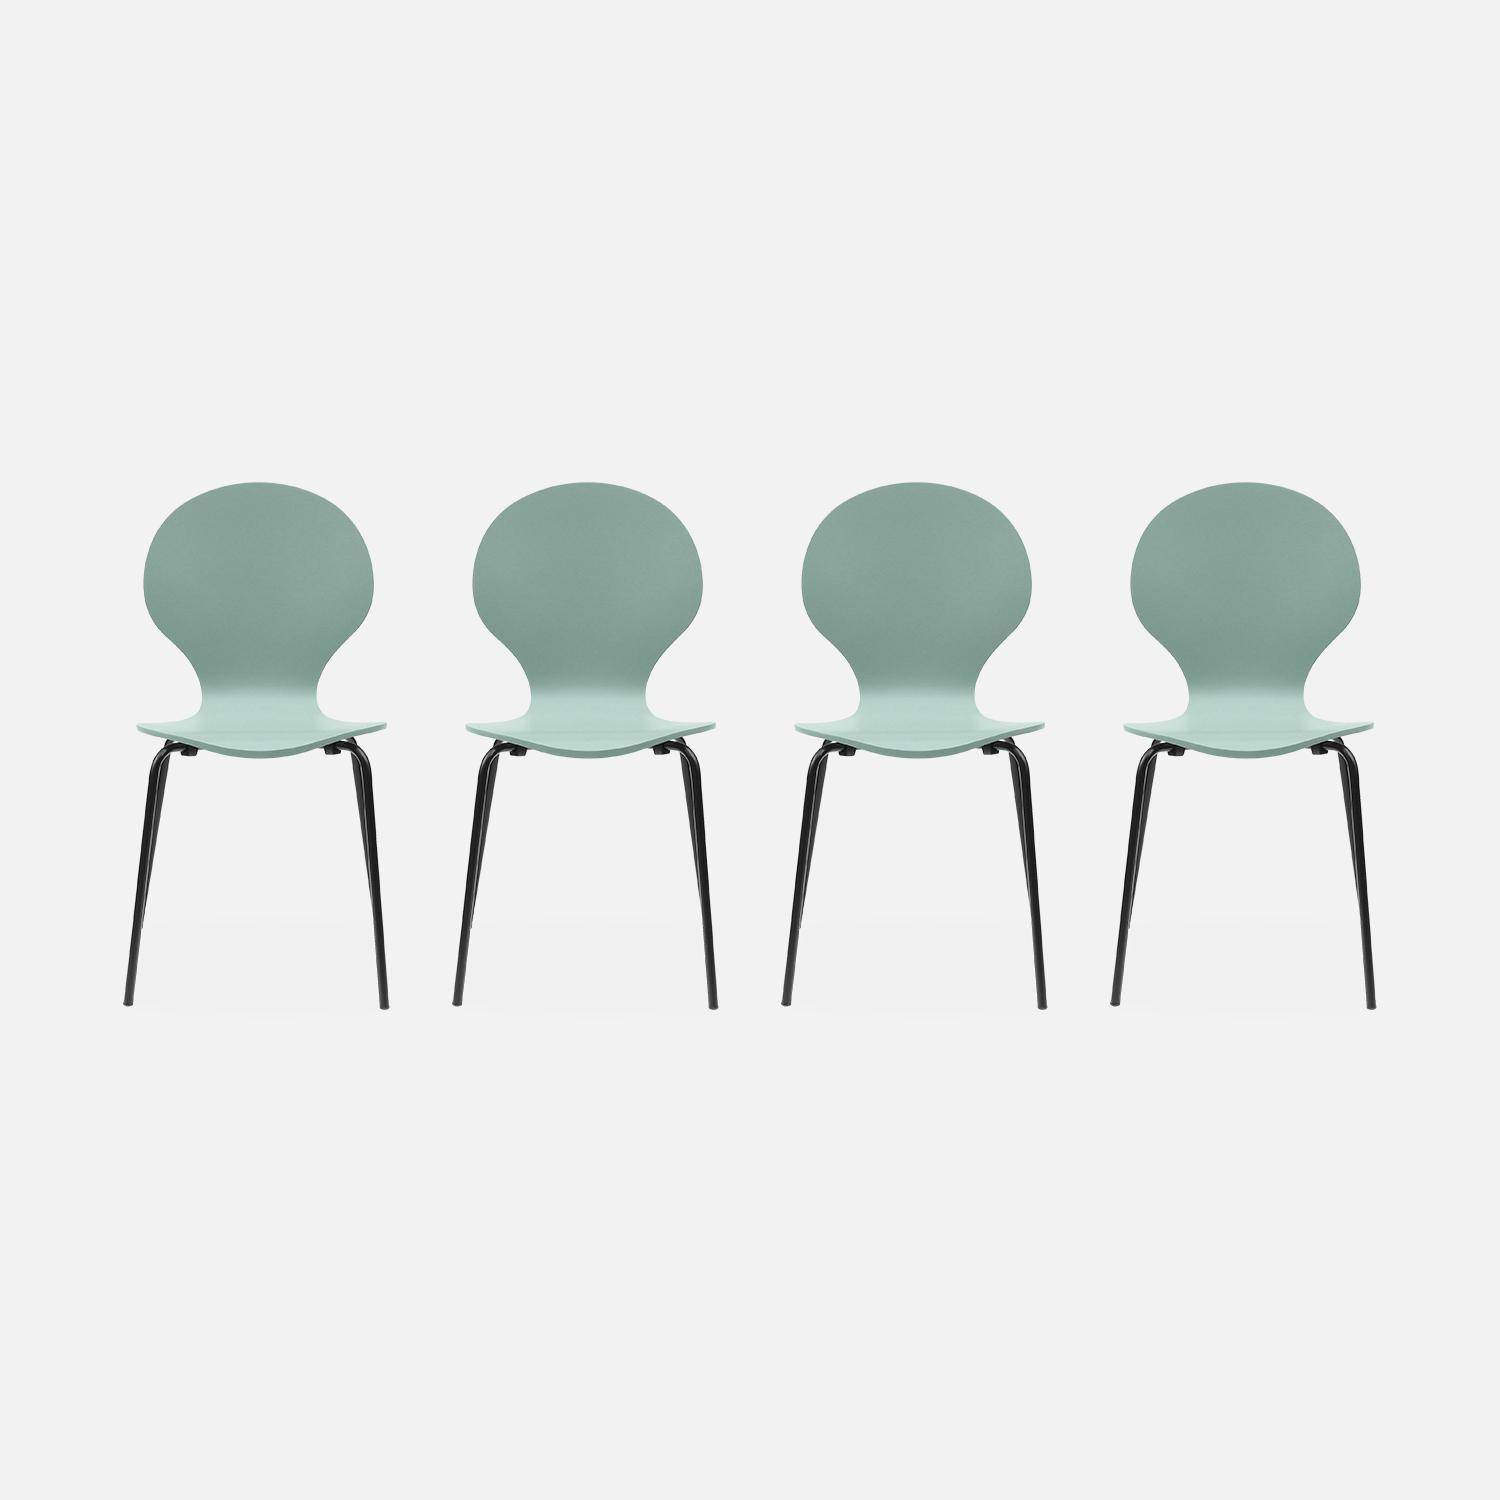 4er Set stapelbare Retro-Stühle in Seladongrün, Hevea-Holz und Sperrholz, Stahlbeine, Naomi, B 43 x T 48 x H 87cm Photo3